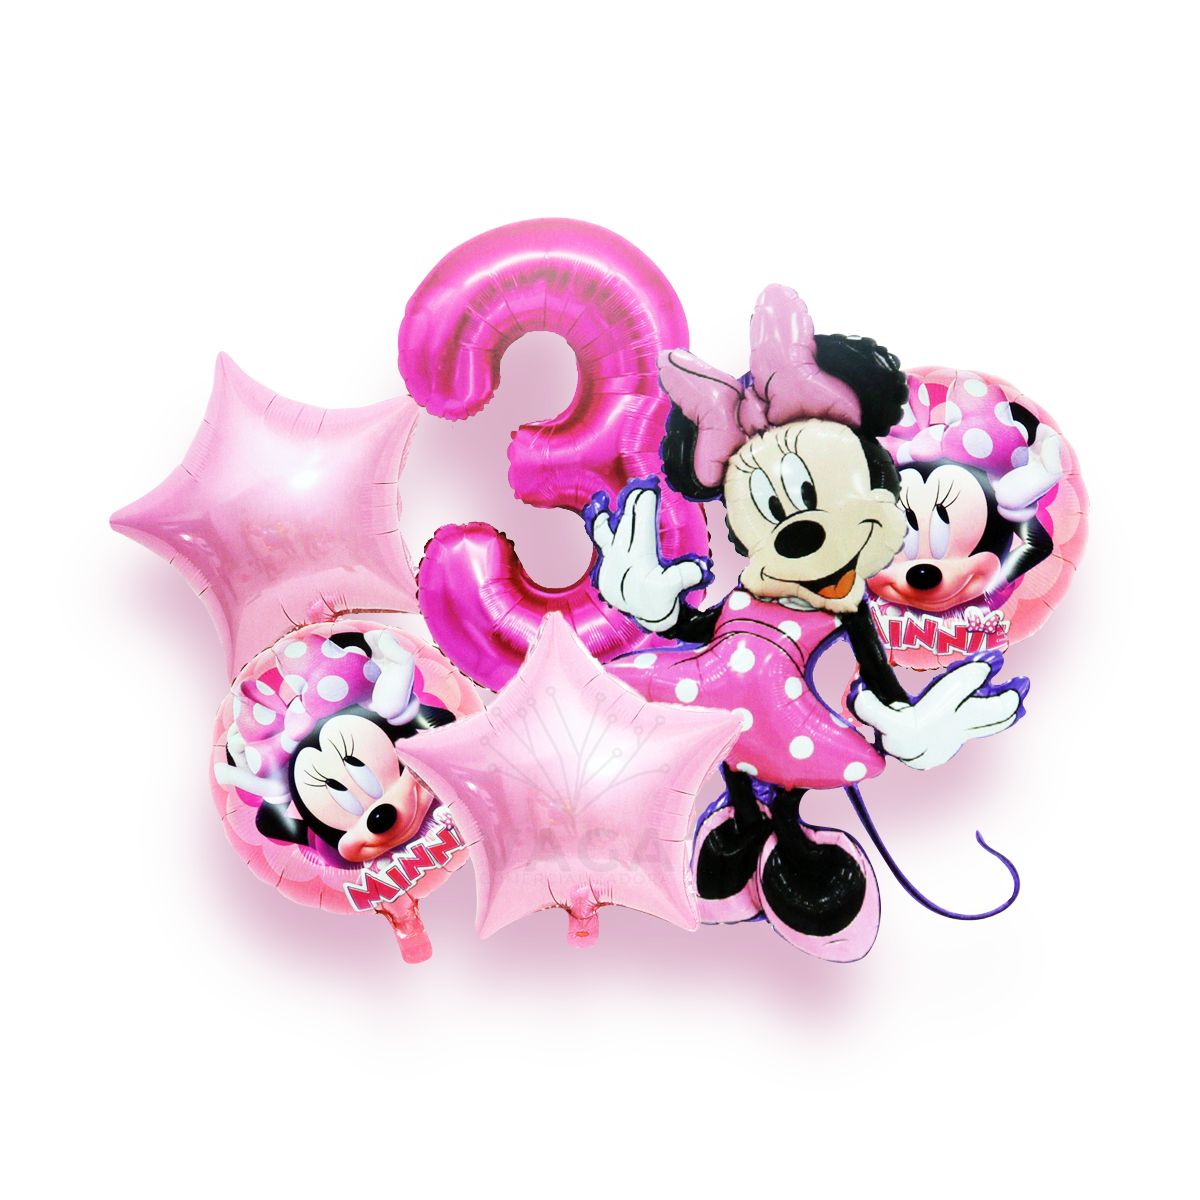 Kits 6pz Globos Metalicos Minnie Mouse Numero Cumpleaños